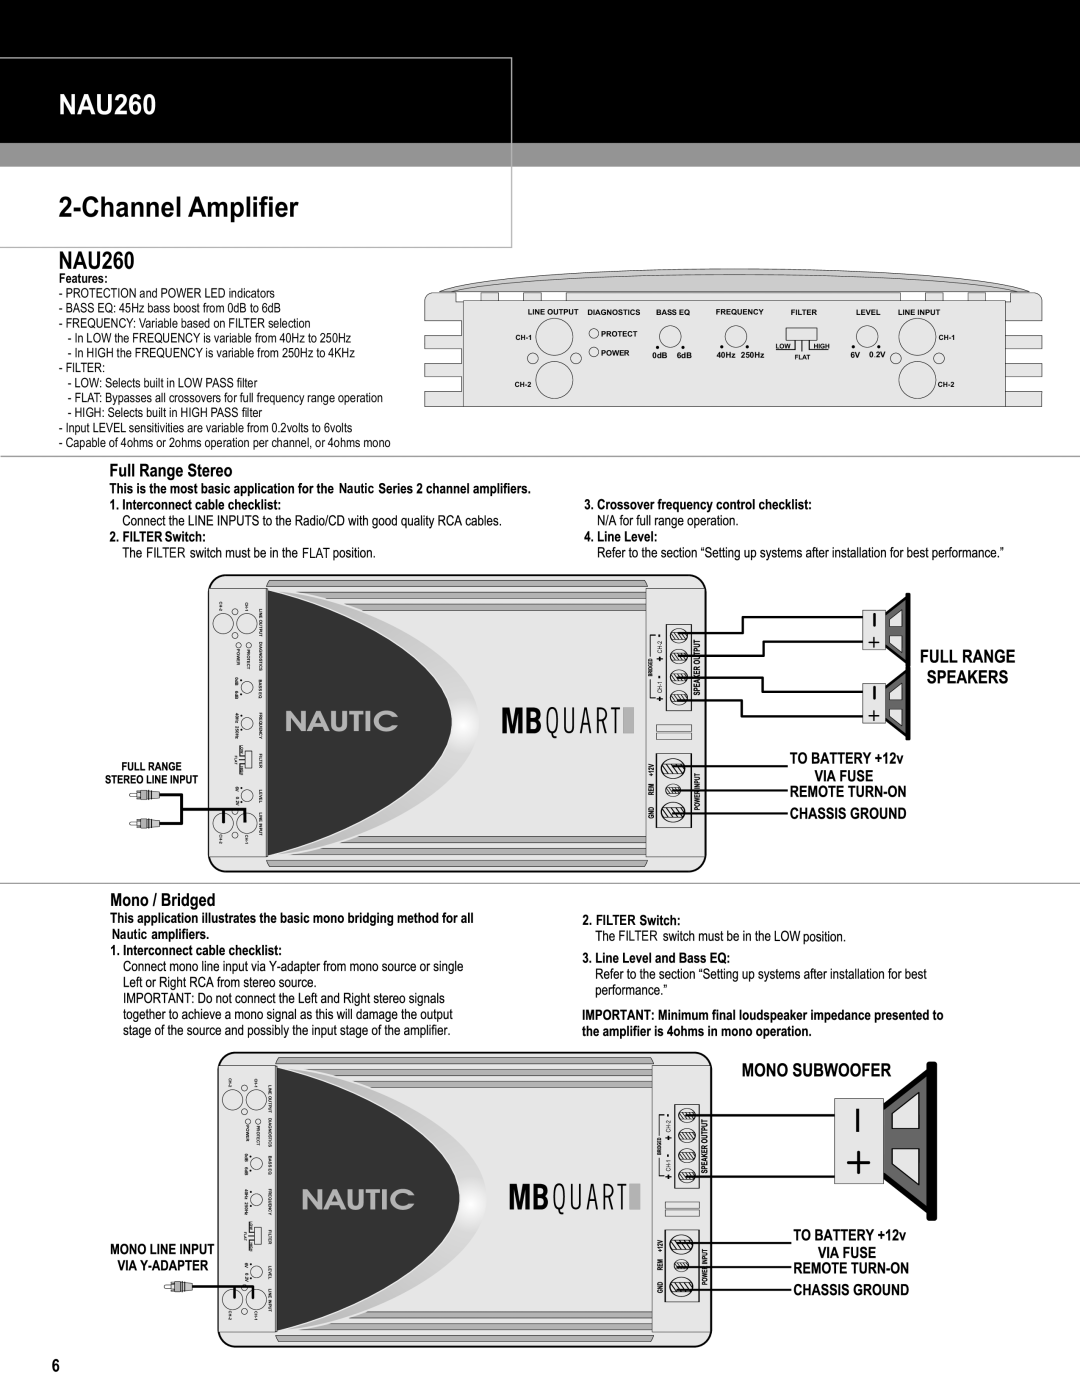 MB QUART NAU260, NAU660, NAU460 installation manual ChannelAmplifier, Nautic, Filter, Flat 